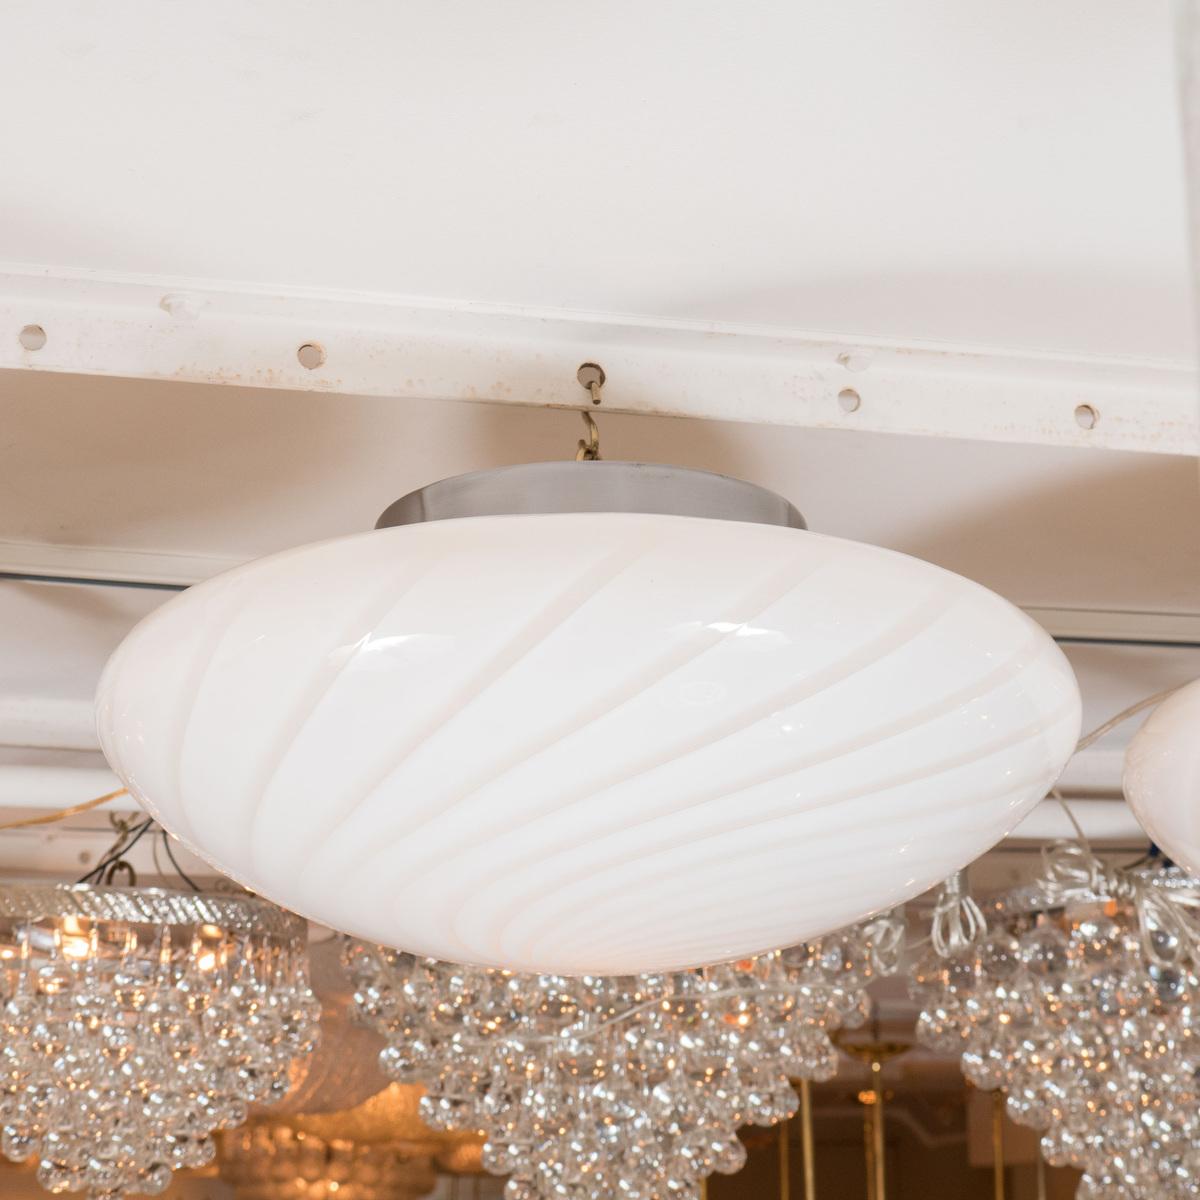 Circular lattimo glass flush mount ceiling fixture.